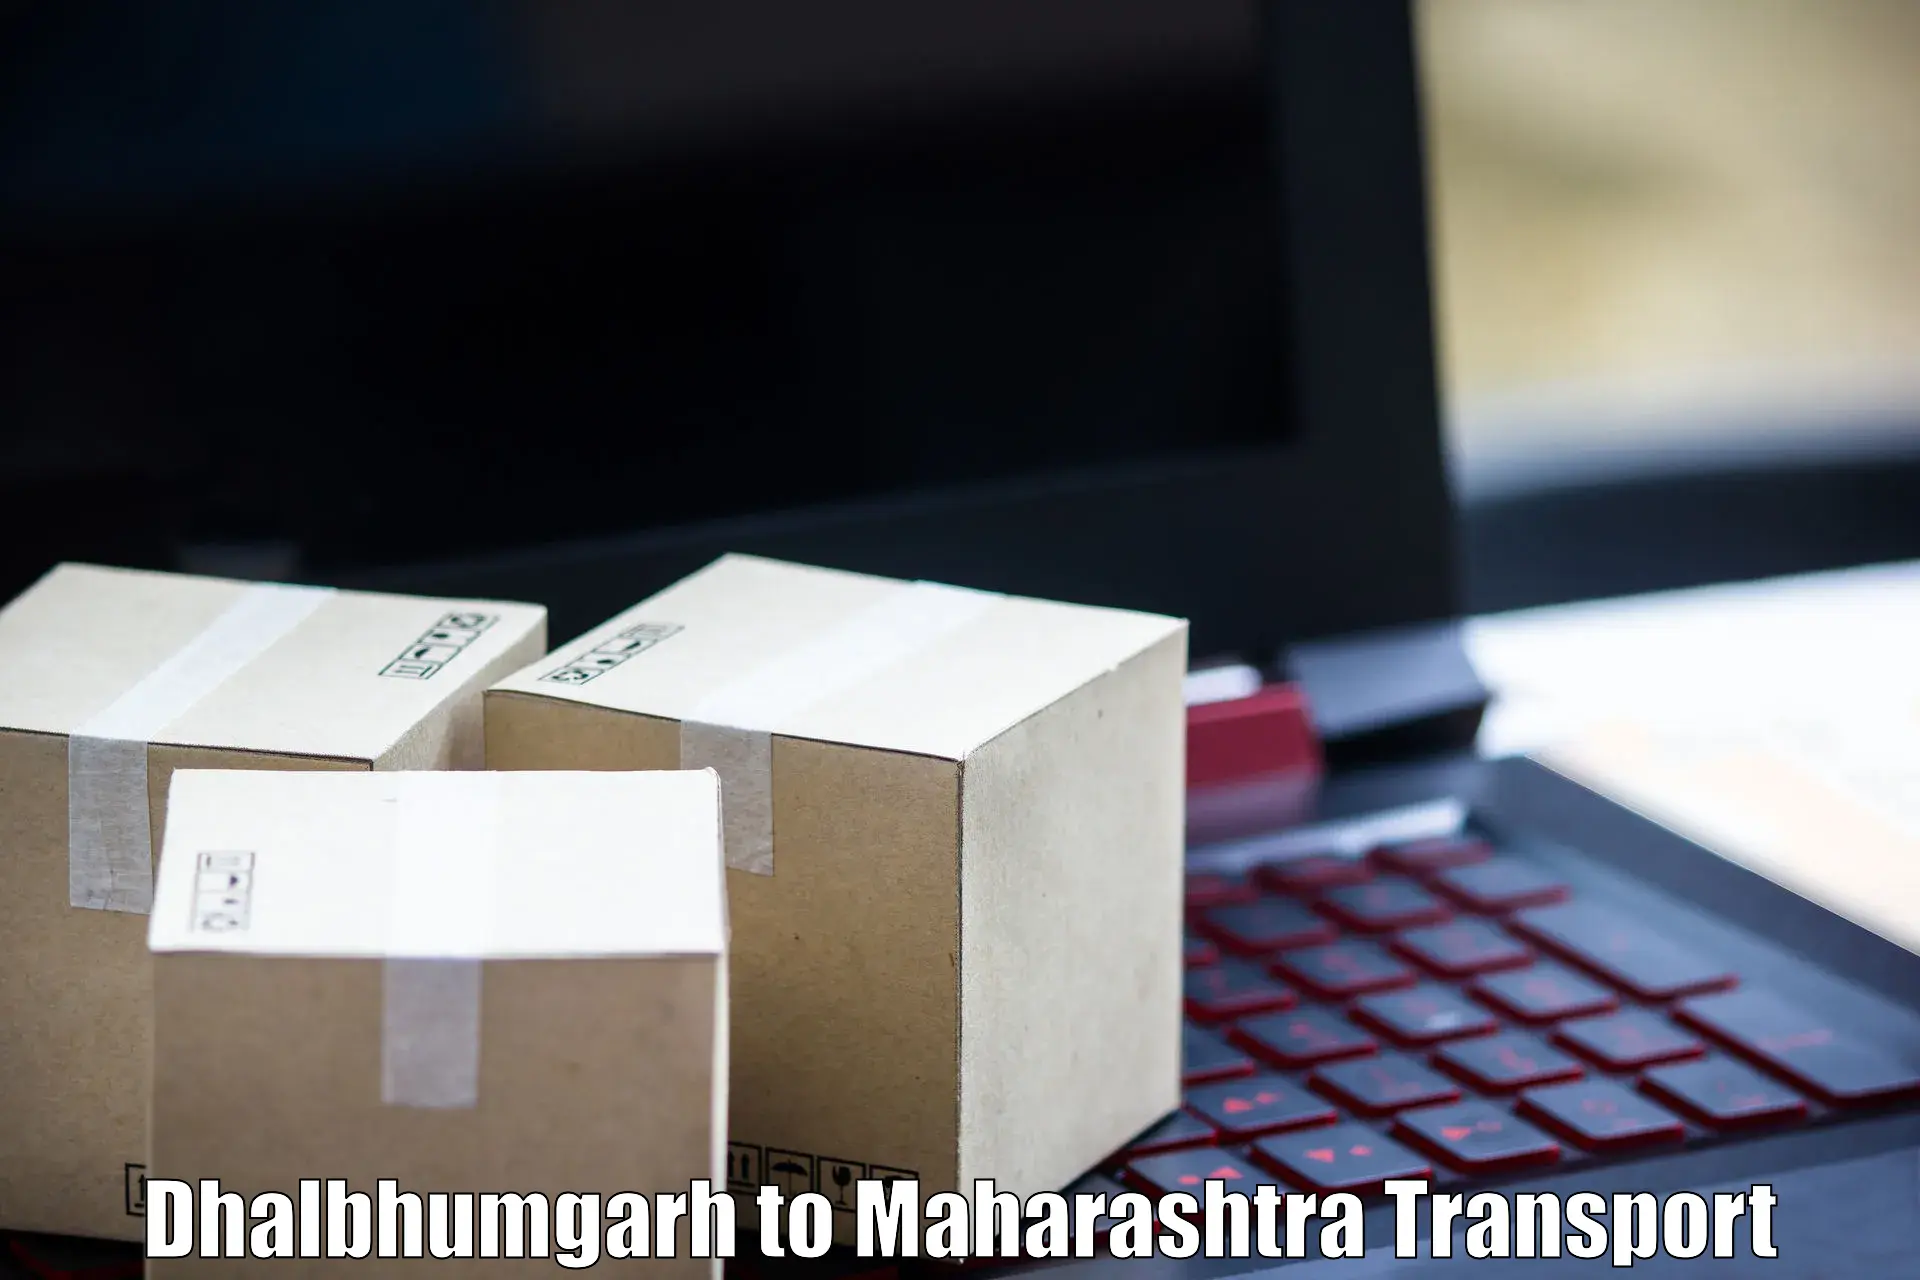 Shipping partner Dhalbhumgarh to Nanded